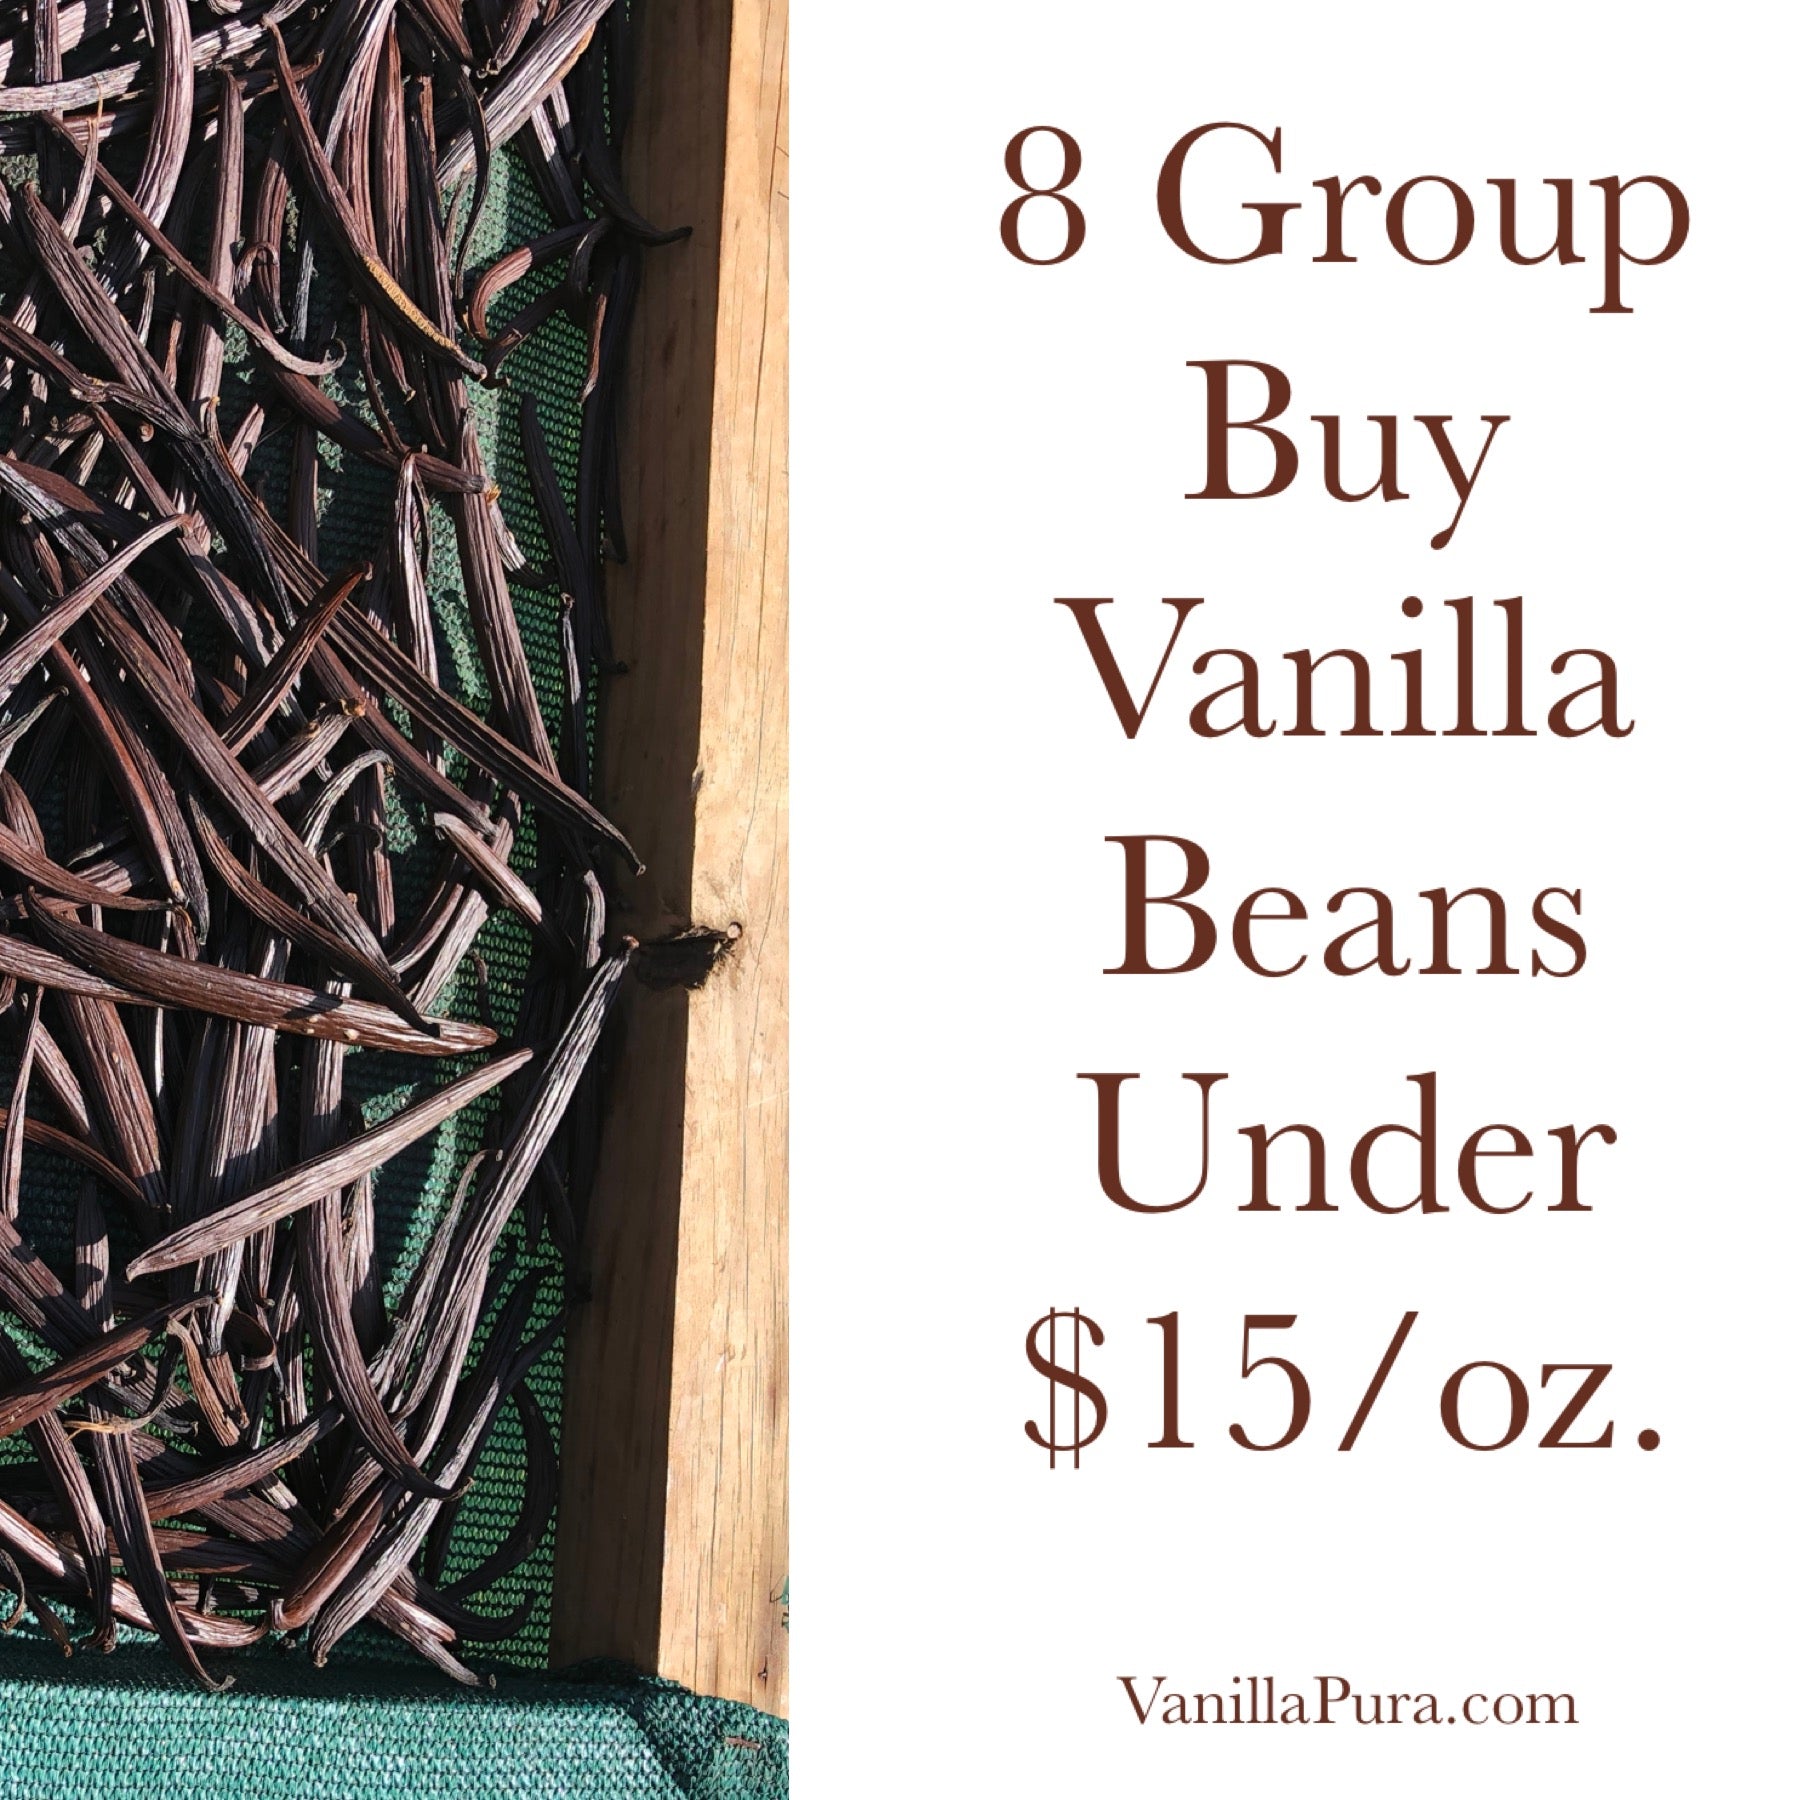 8 Group Buy Vanilla Beans Under $15/oz